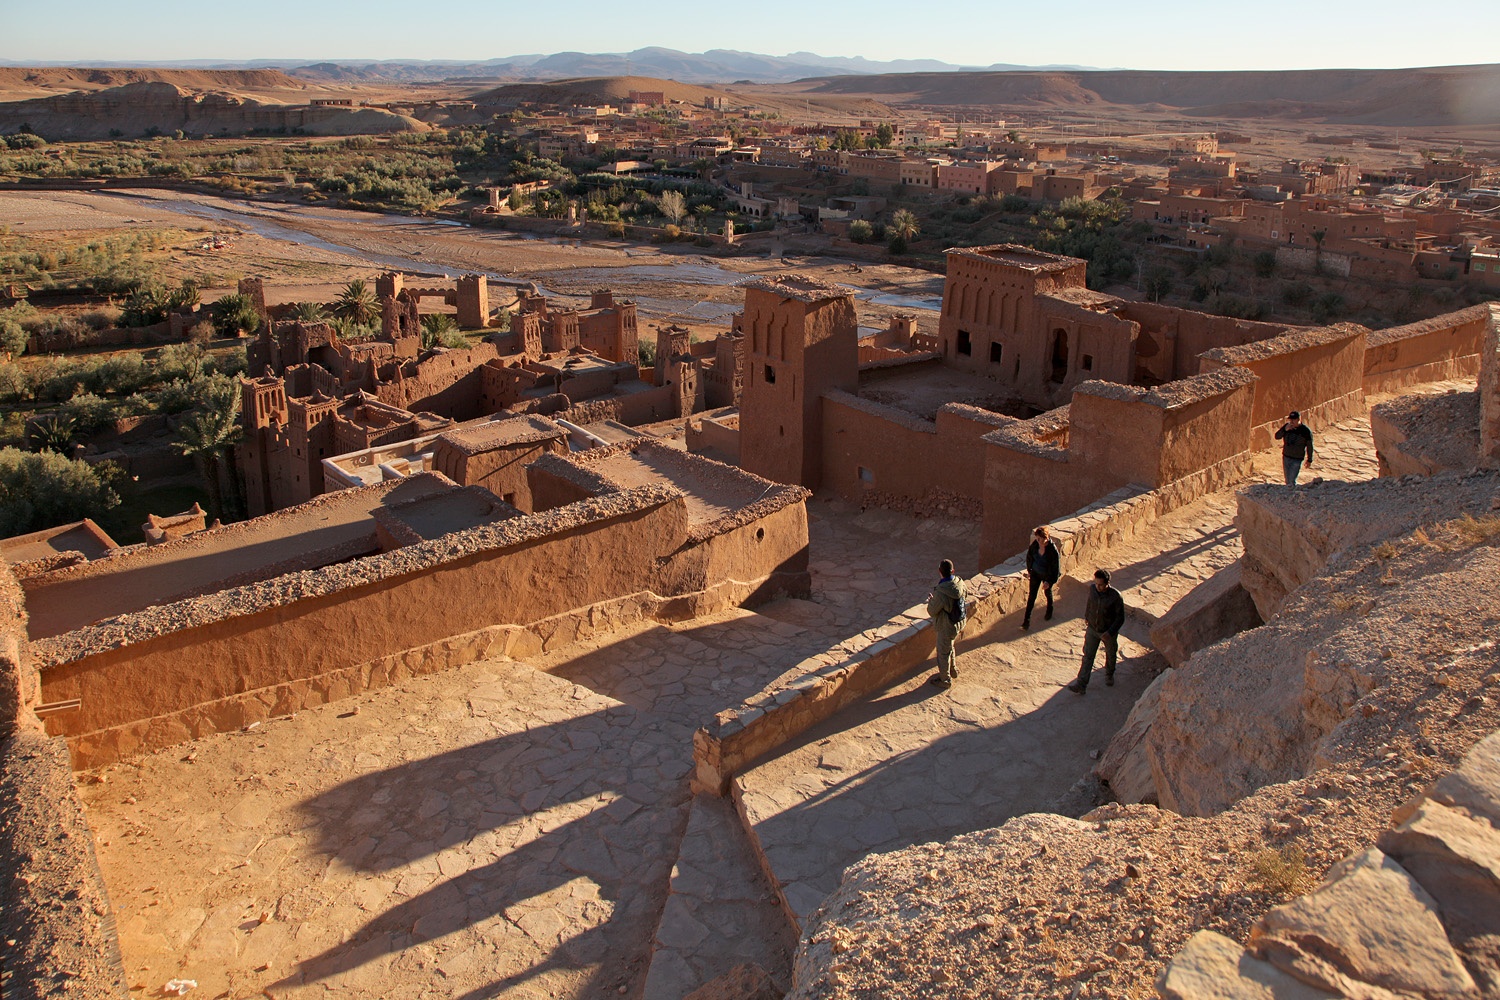 bill-hocker-ait-ben-haddou-near-ouarzazate-morocco-2012